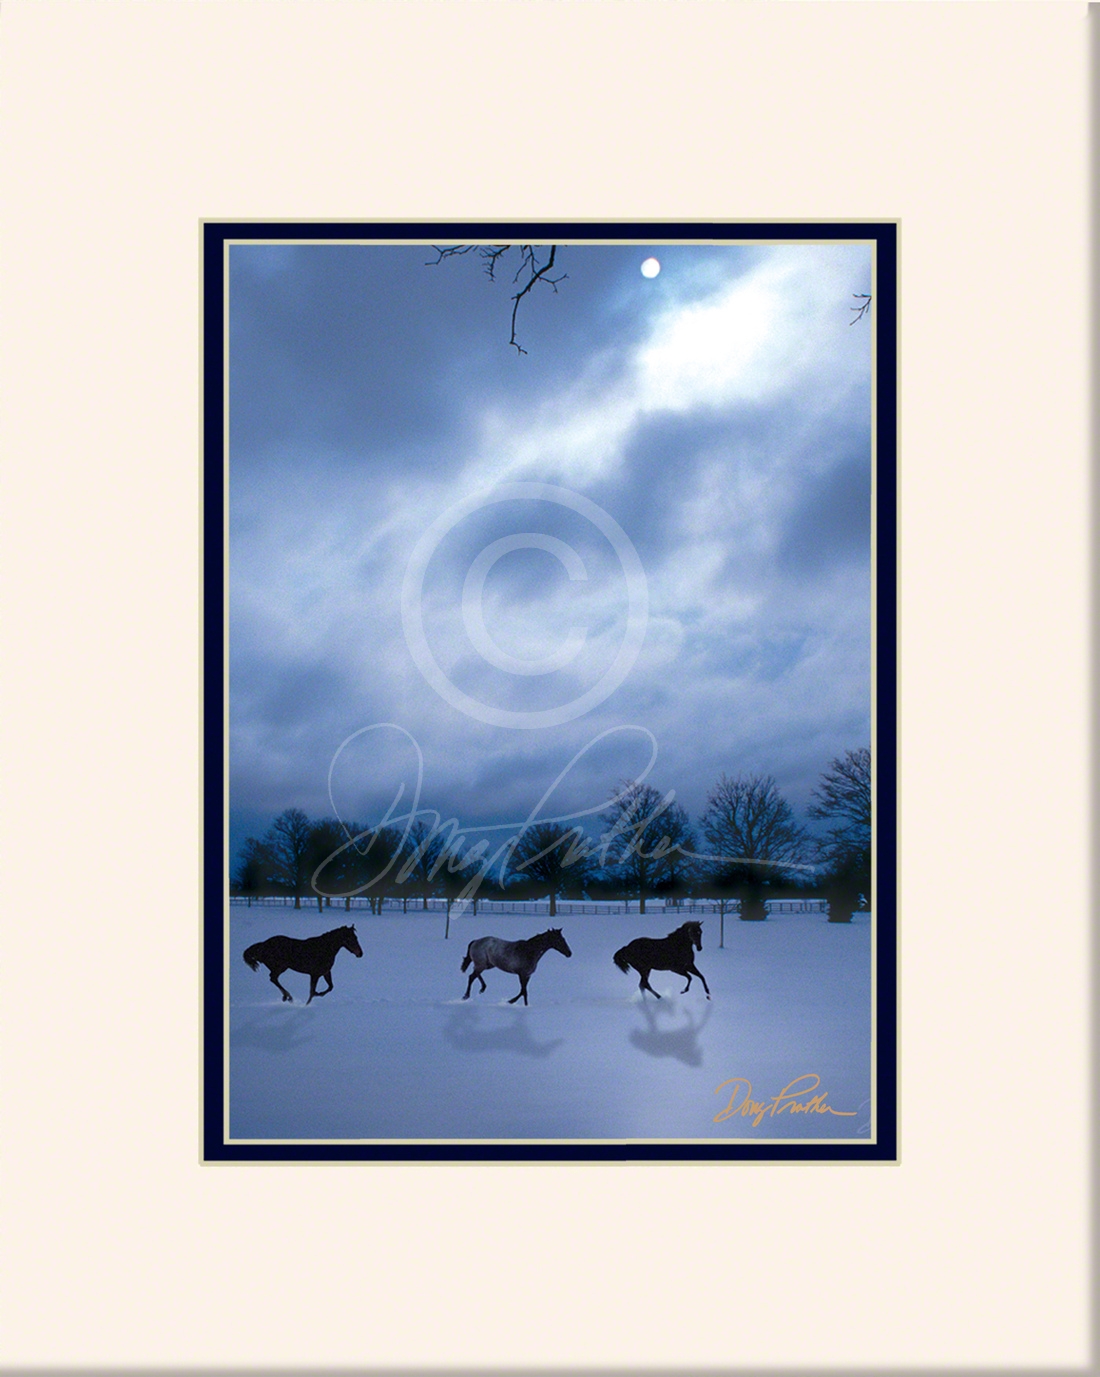 Three Thoroughbreds race horses run in a moon lit winter snow.